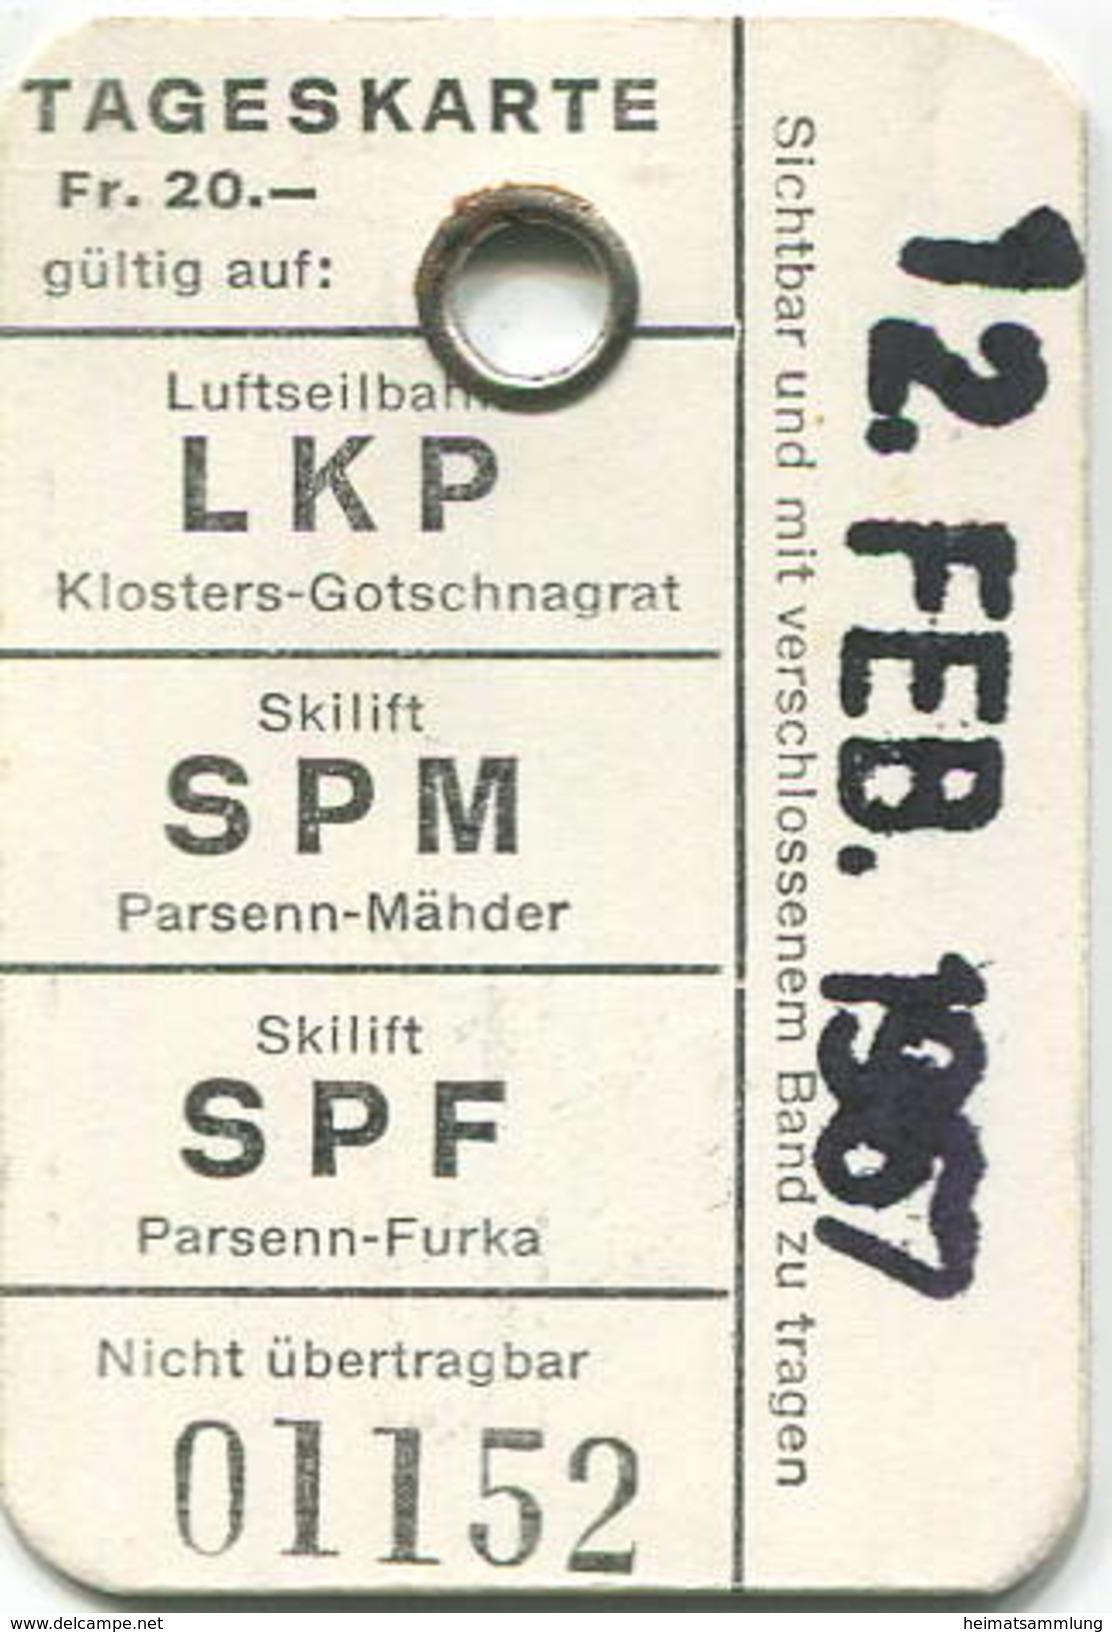 Schweiz - Tageskarte - Luftseilbahn - Skilift - LKP SPM SPF 1967 - Europa